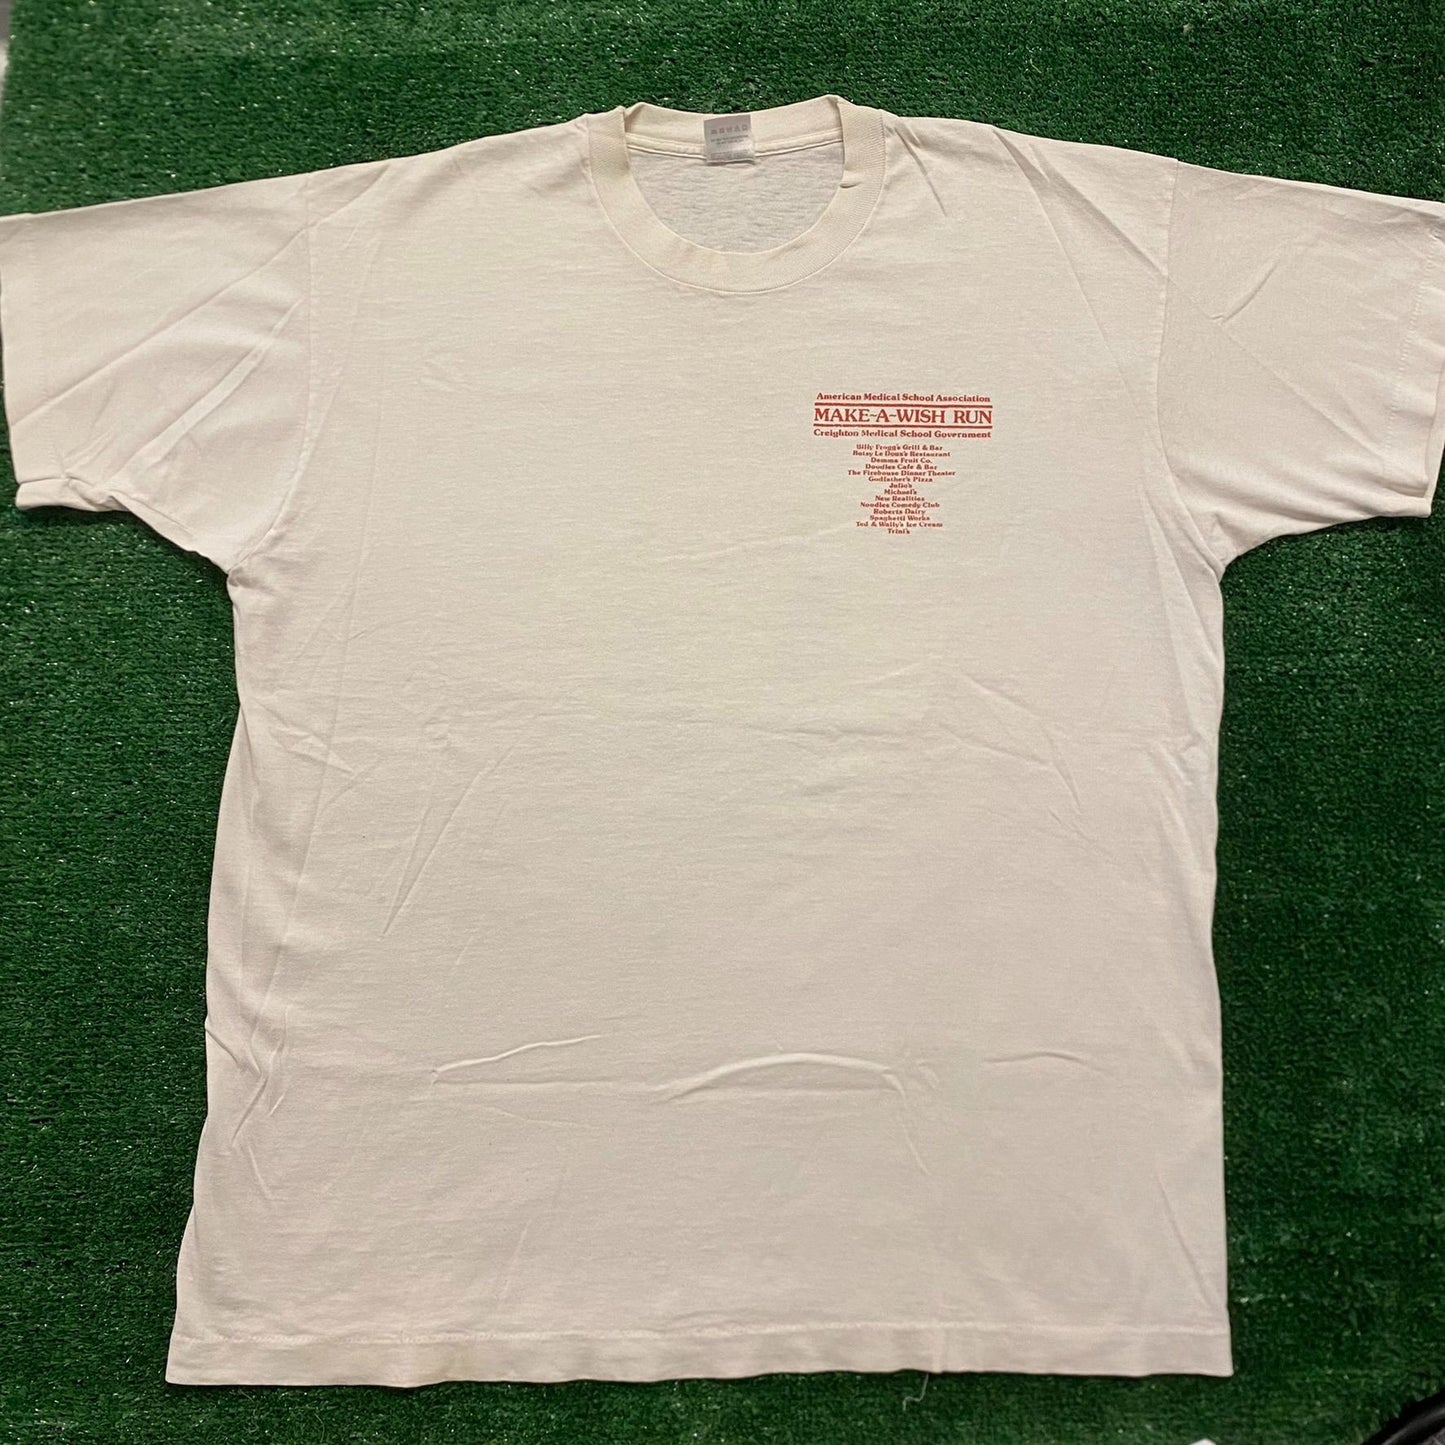 Make-A-Wish Run Vintage 90s Charity T-Shirt